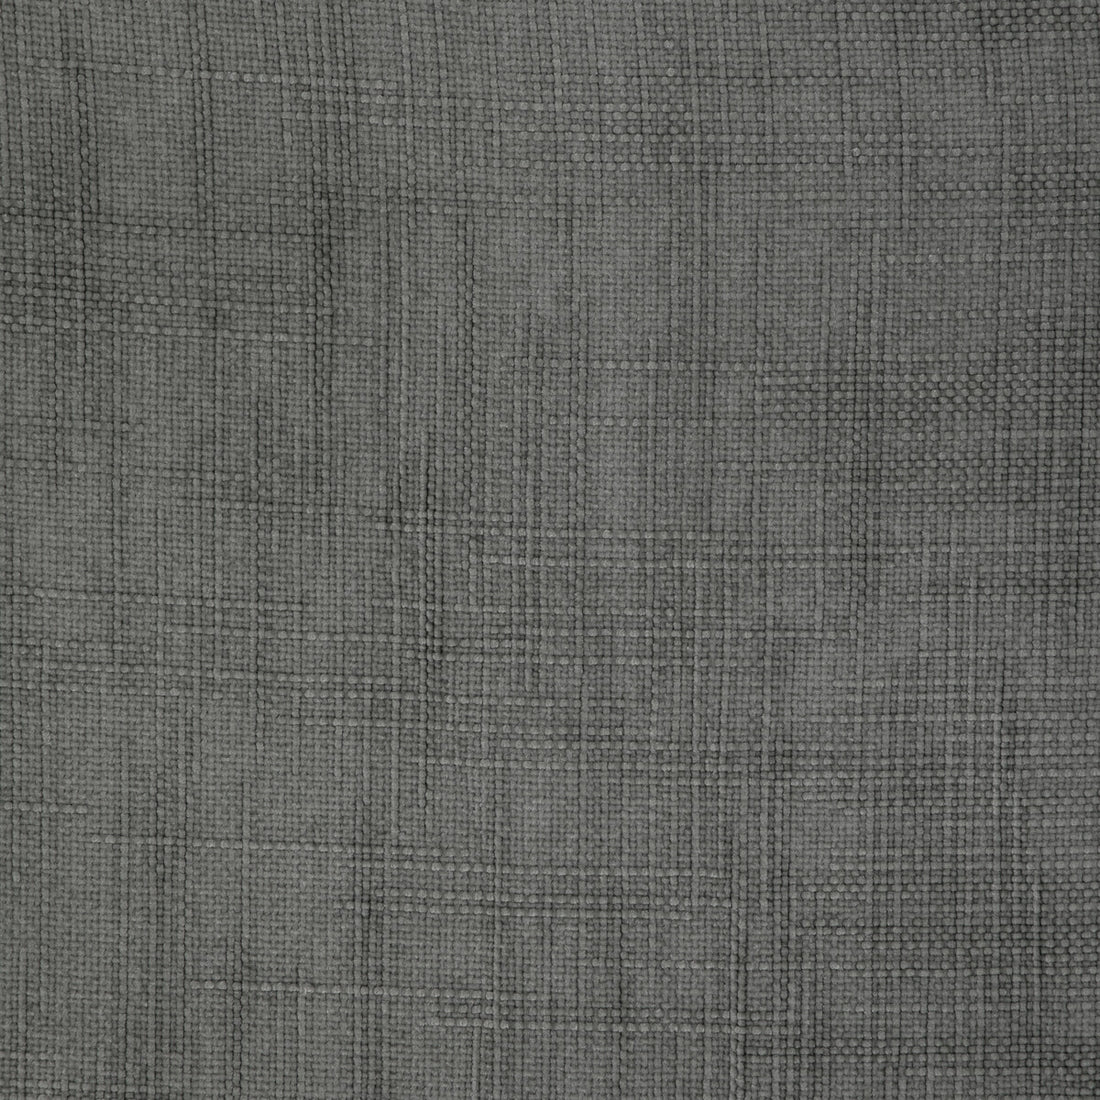 Kravet Smart fabric in 36991-11 color - pattern 36991.11.0 - by Kravet Smart in the Performance Kravetarmor collection